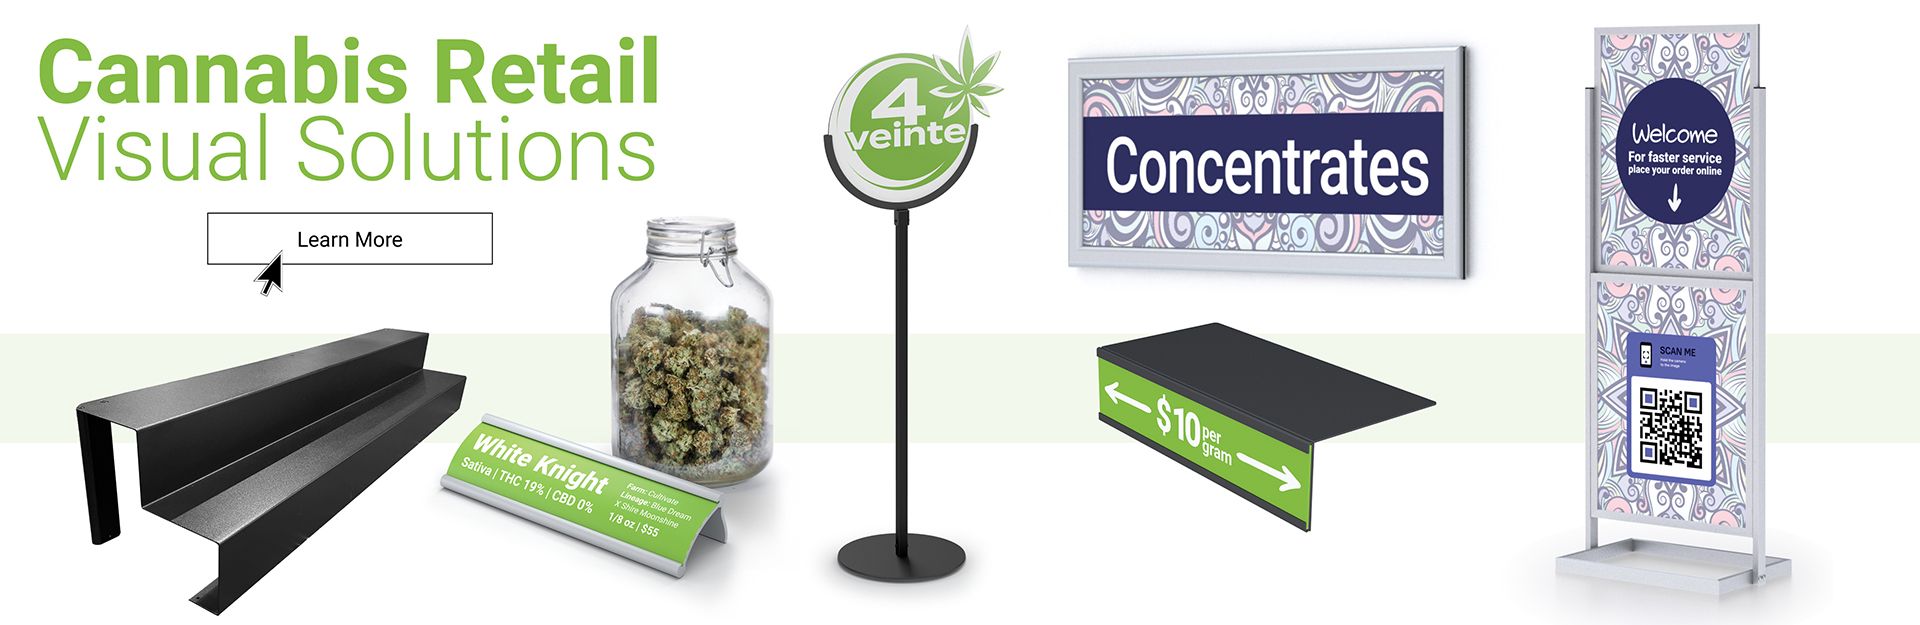 Cannabis Retail Visual Solutions